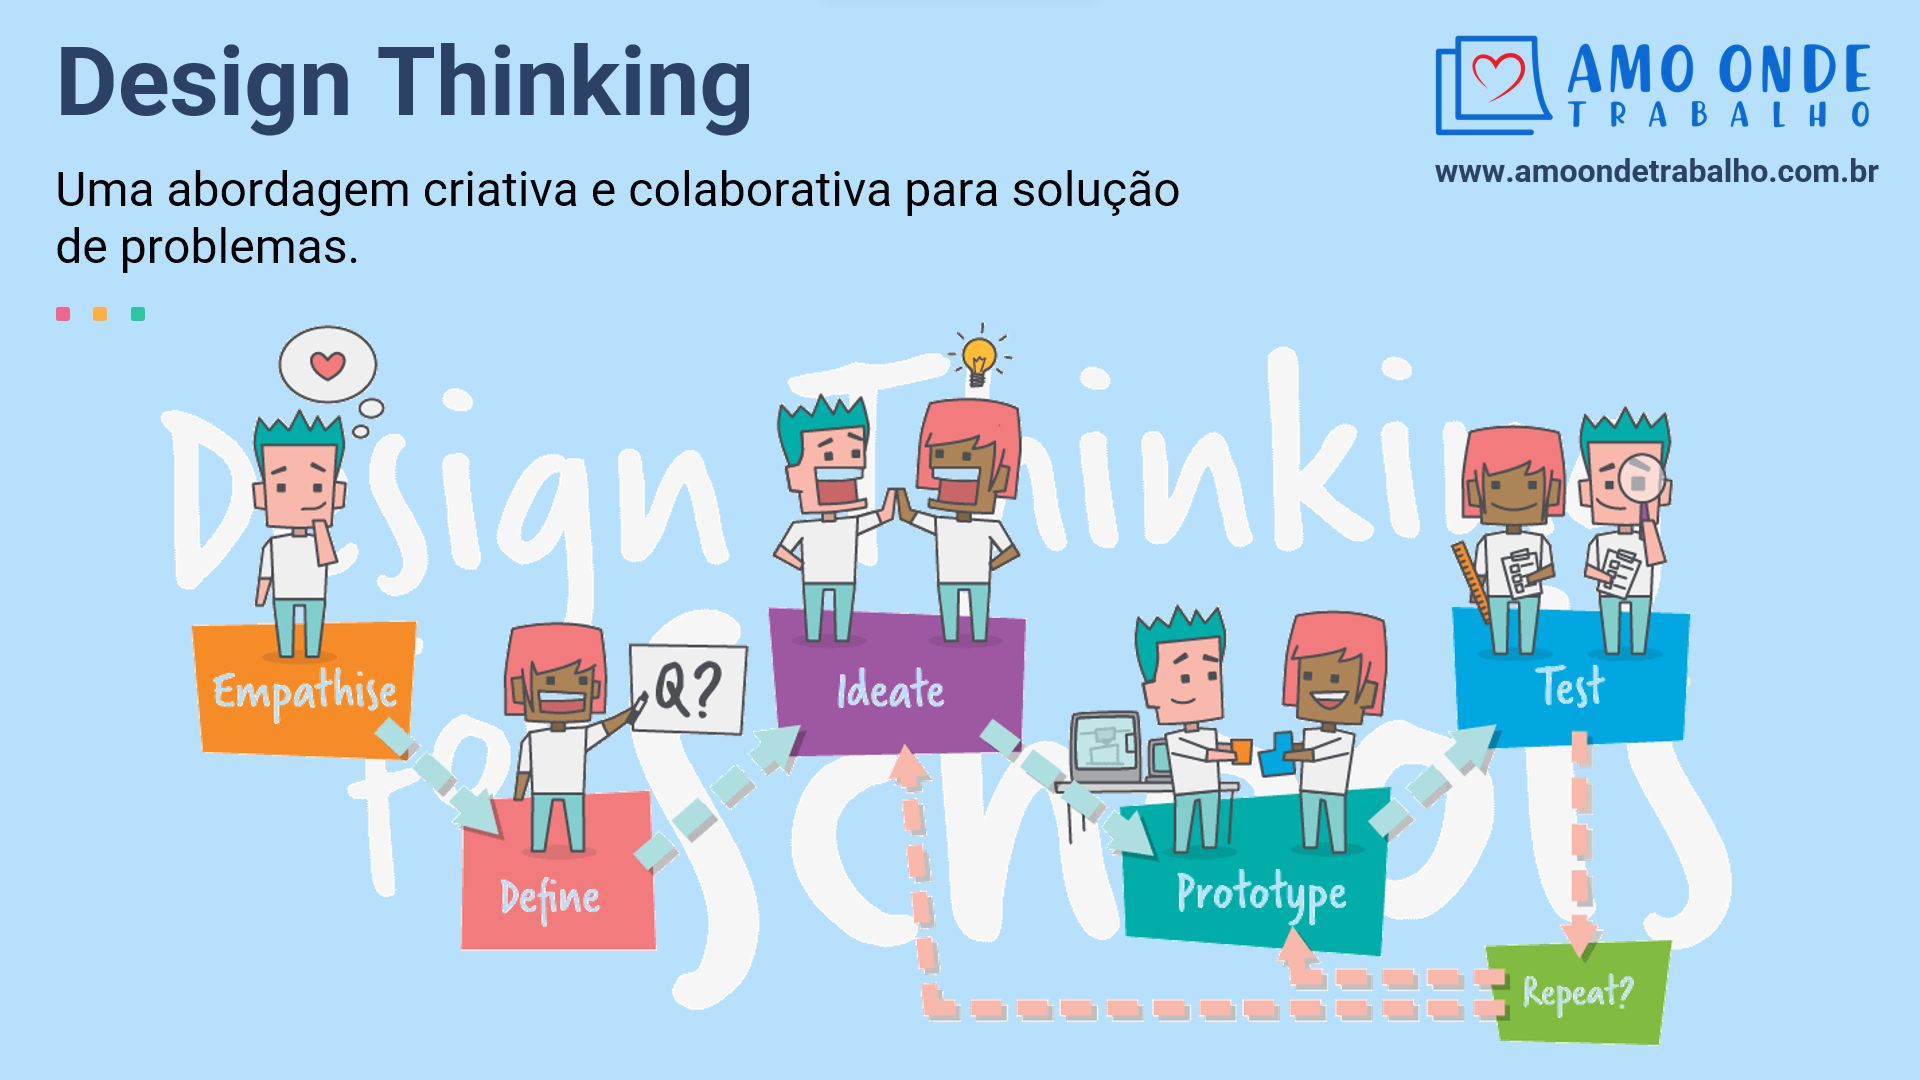 Design Thinking - Capa